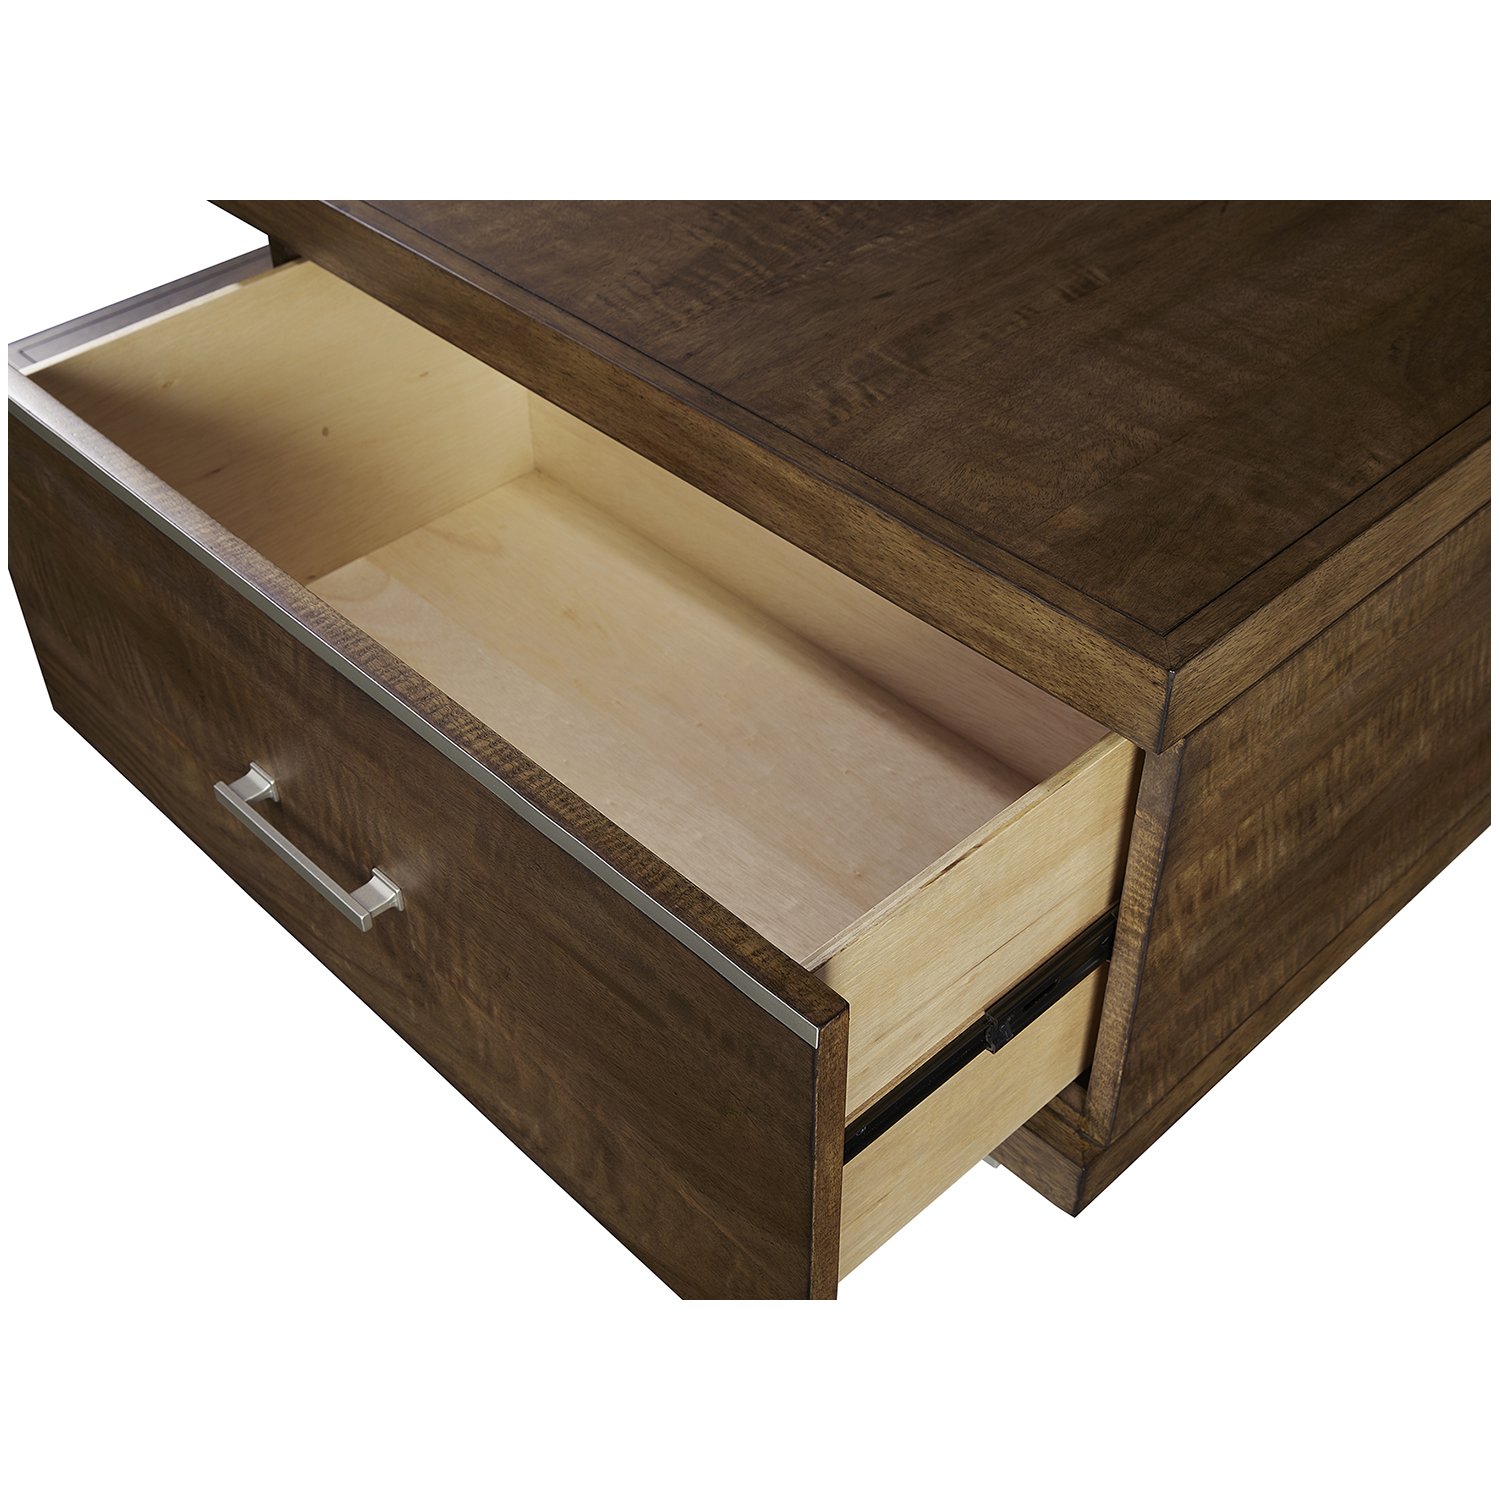 T142-01 drawer.jpg